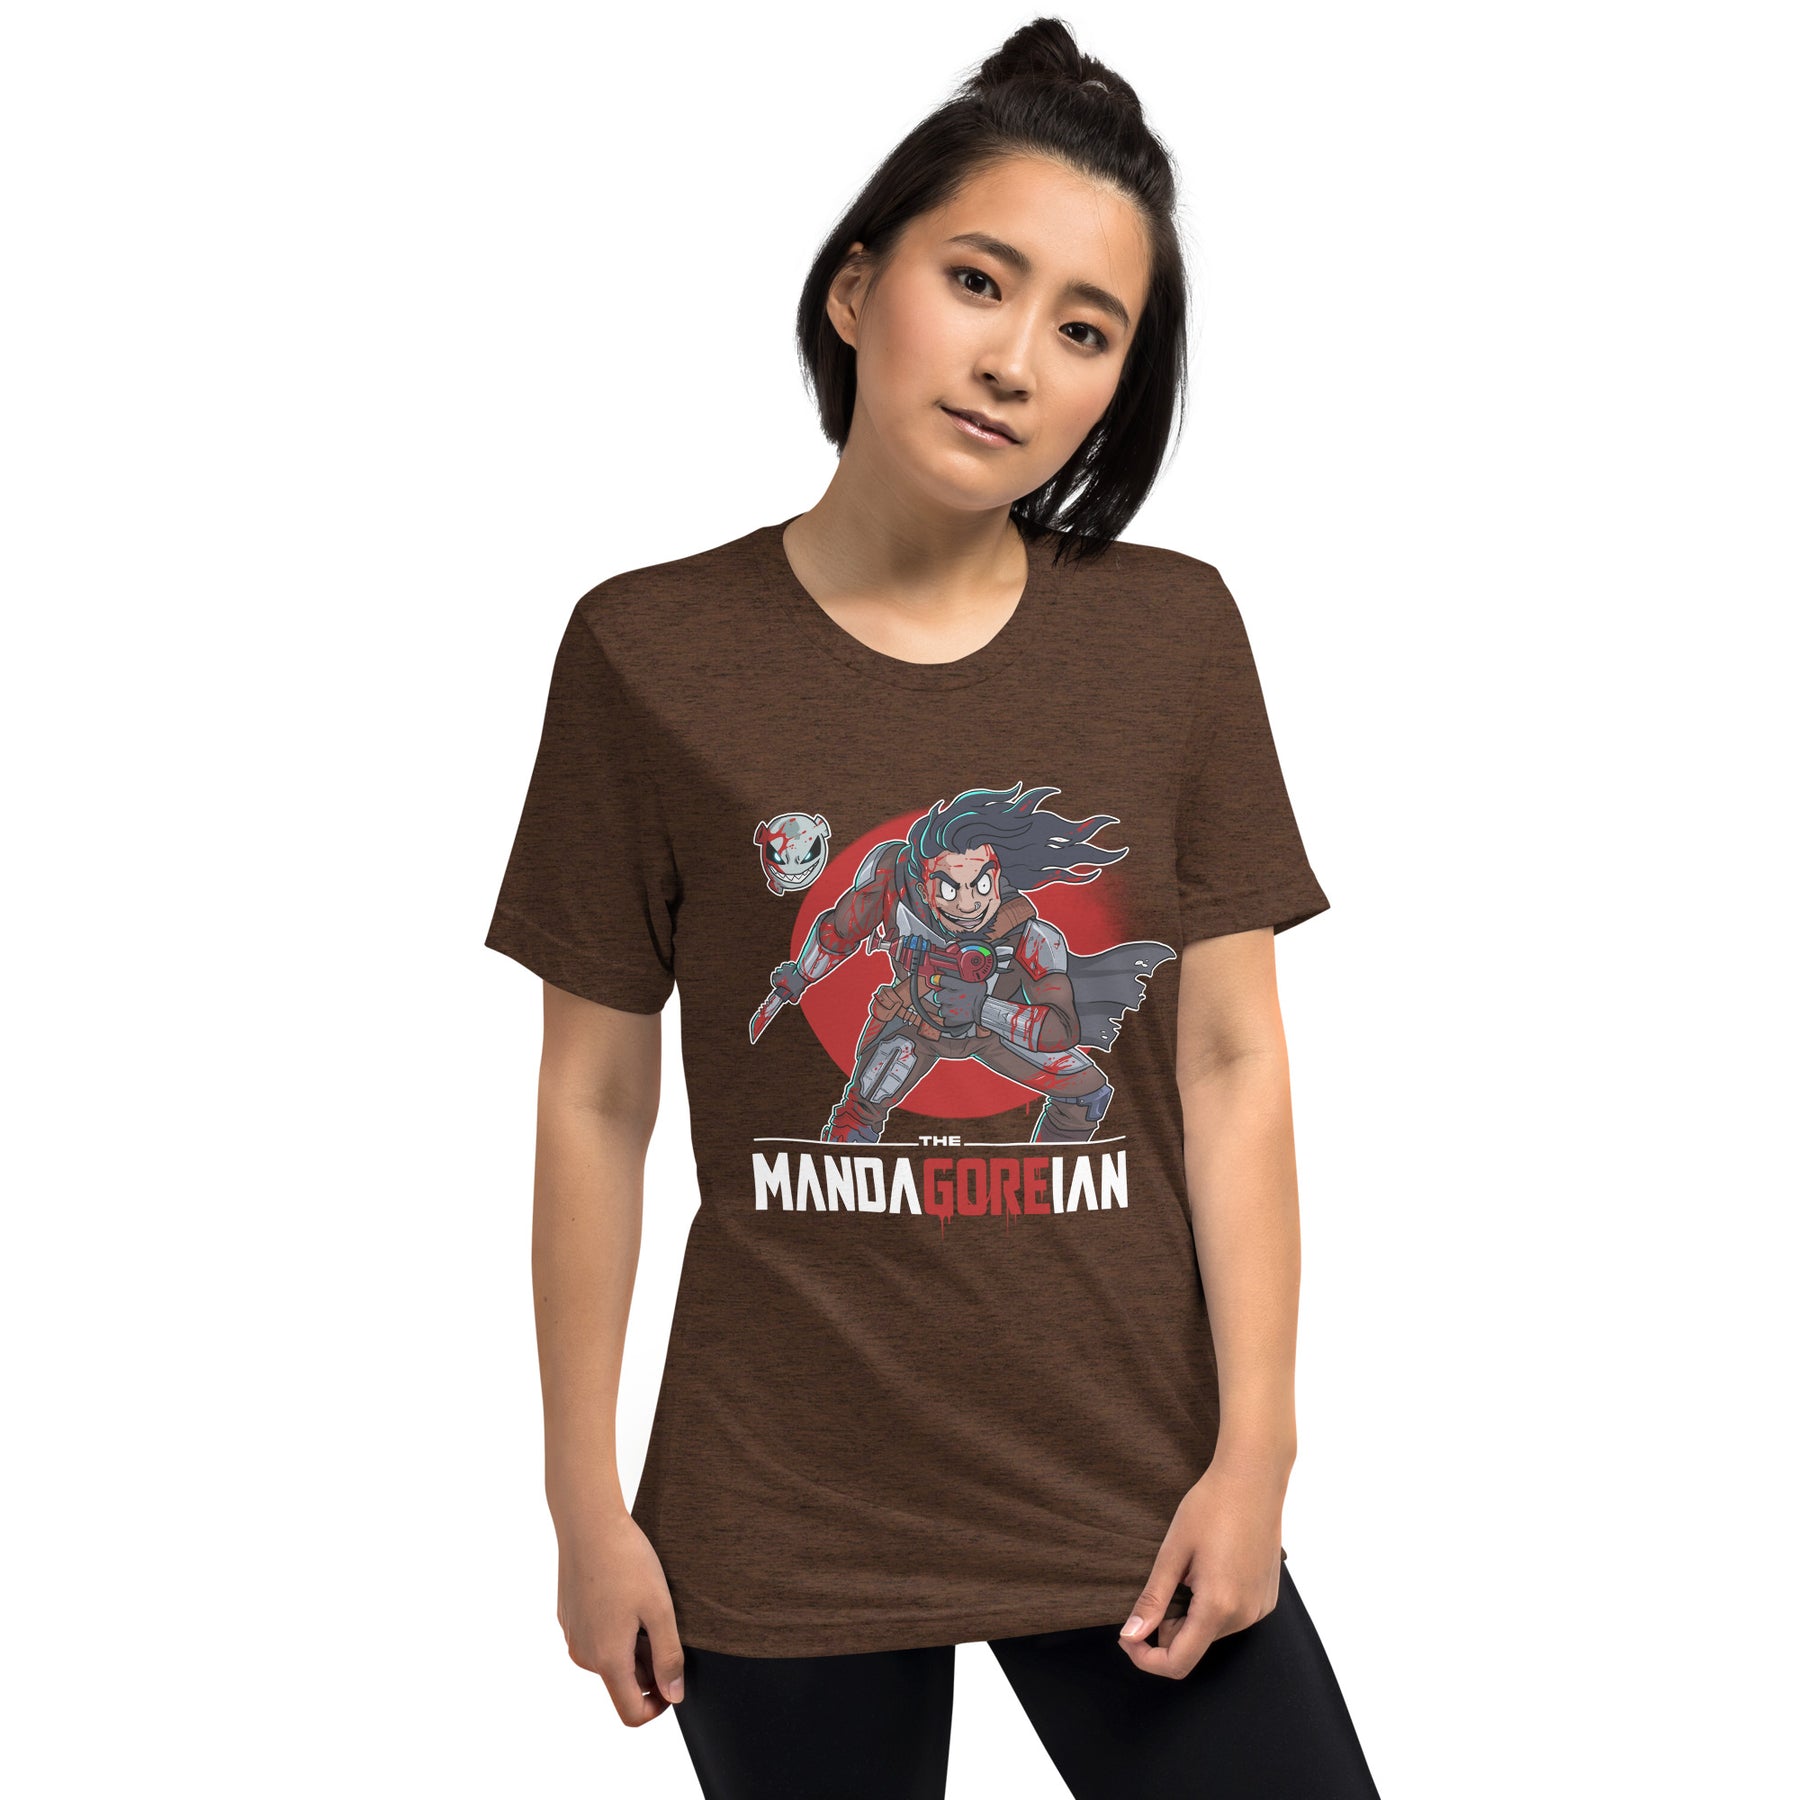 The MandaGOREian Short Sleeve T-shirt